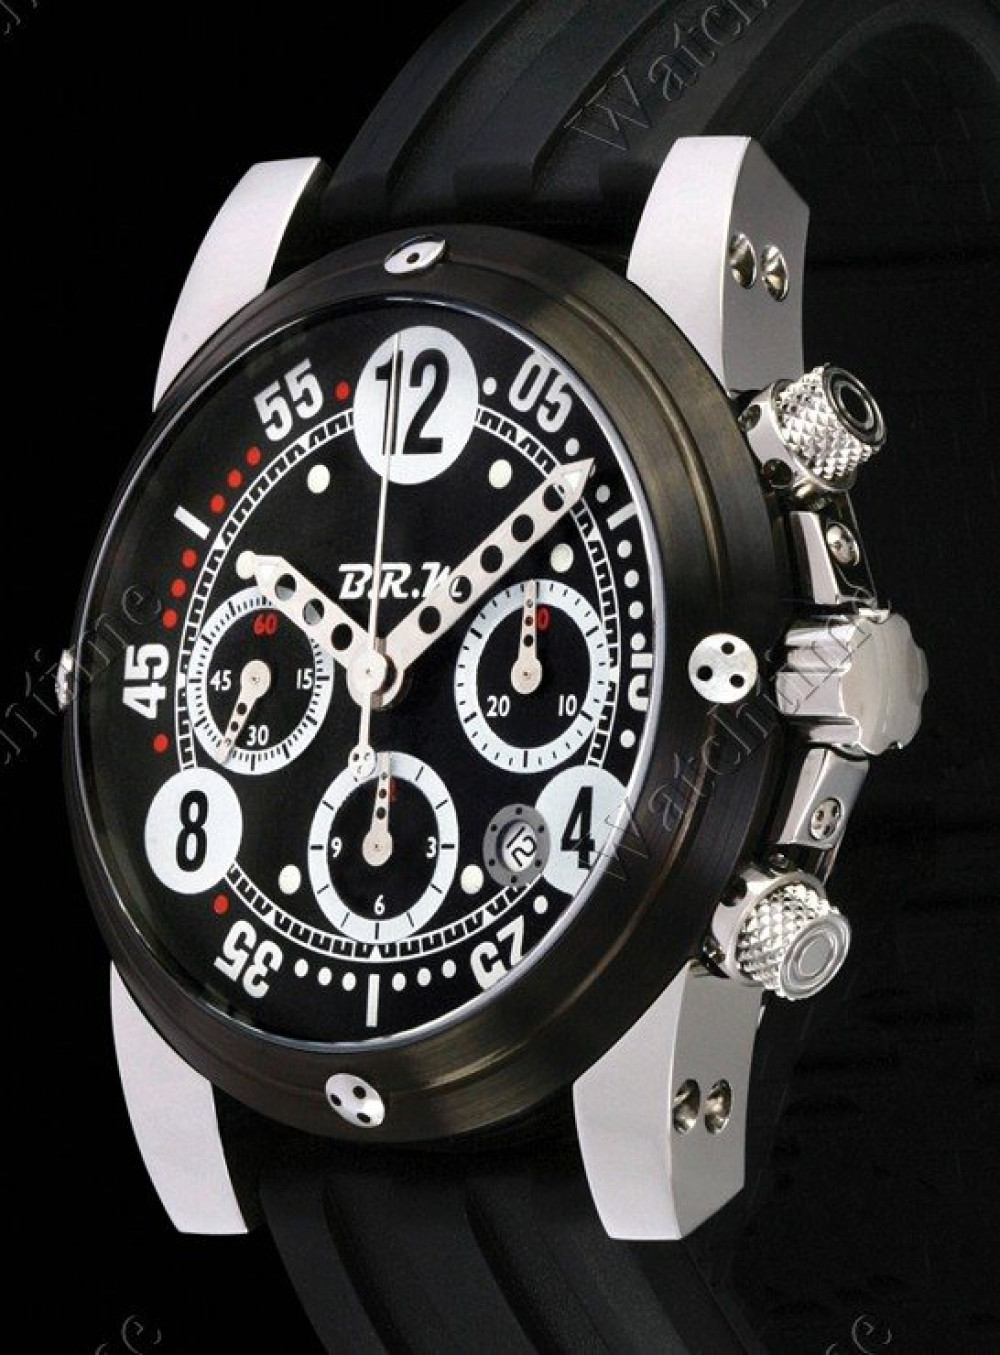 Zegarek firmy B.R.M, model GP44 Model